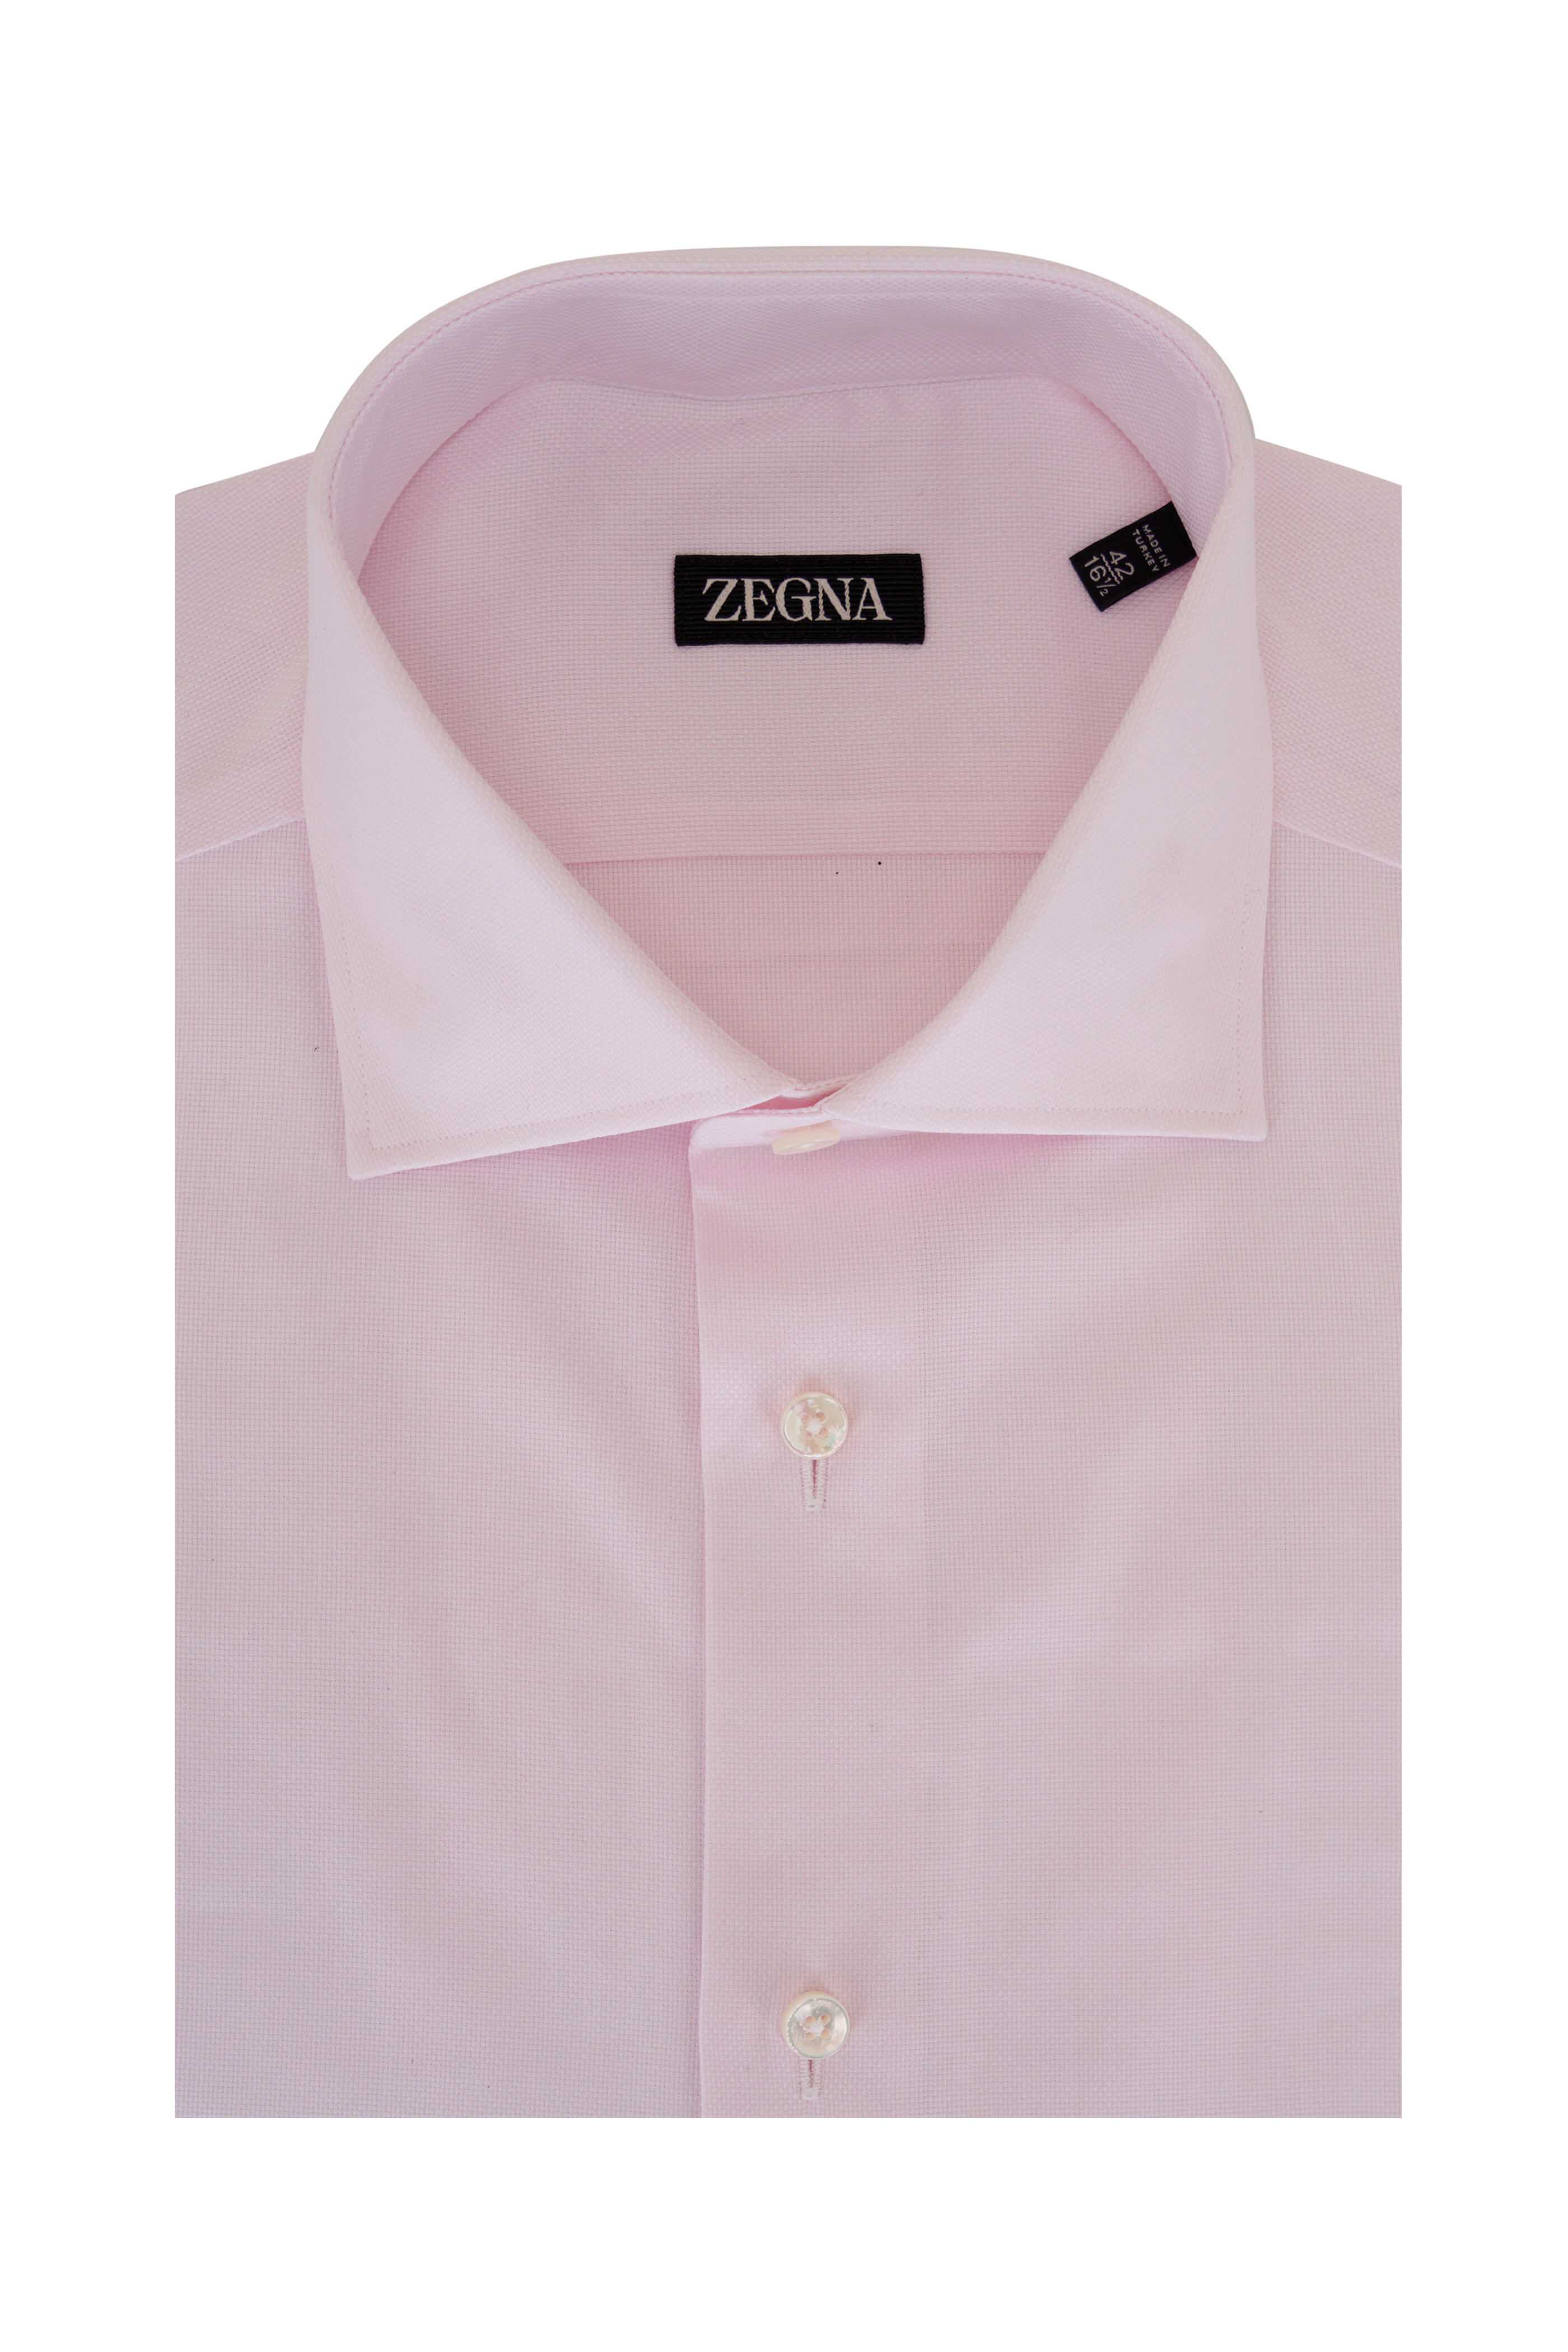 Zegna - Solid Pink Cotton Dress Shirt | Mitchell Stores